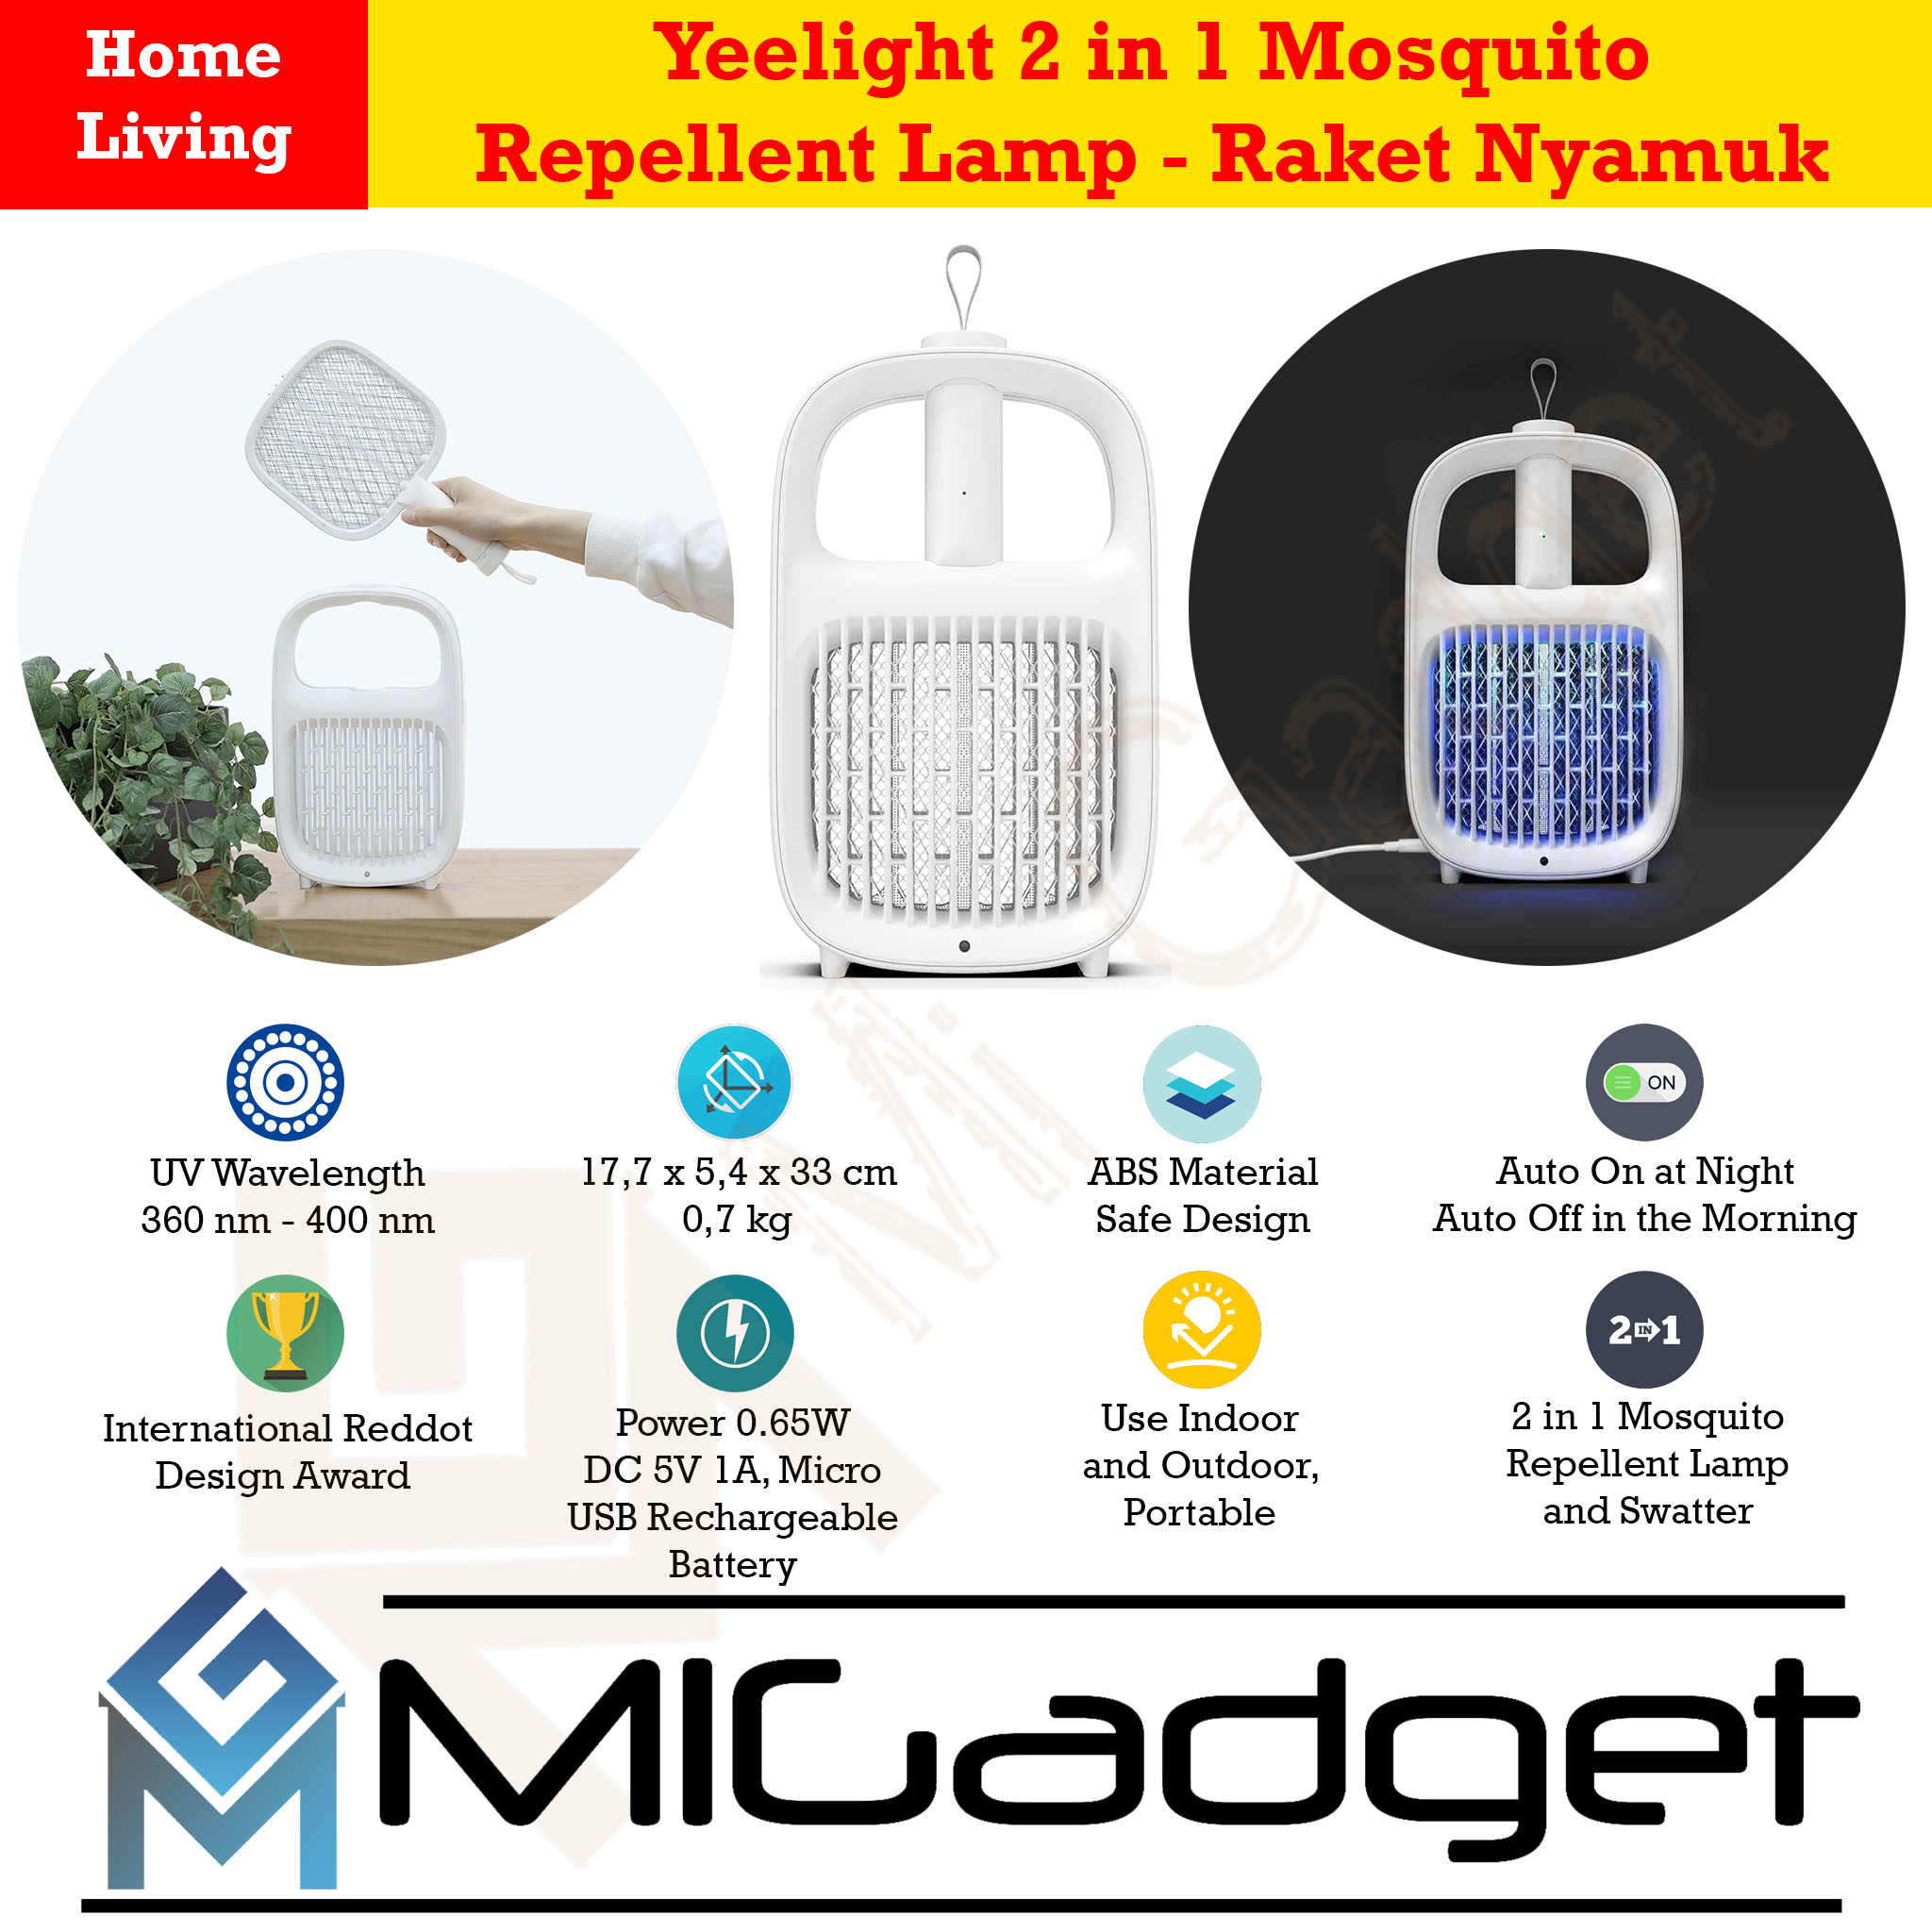 Yeelight 2 In 1 Mosquito Repellent Lamp Swatter Raket Nyamuk Mi Gadget Malang